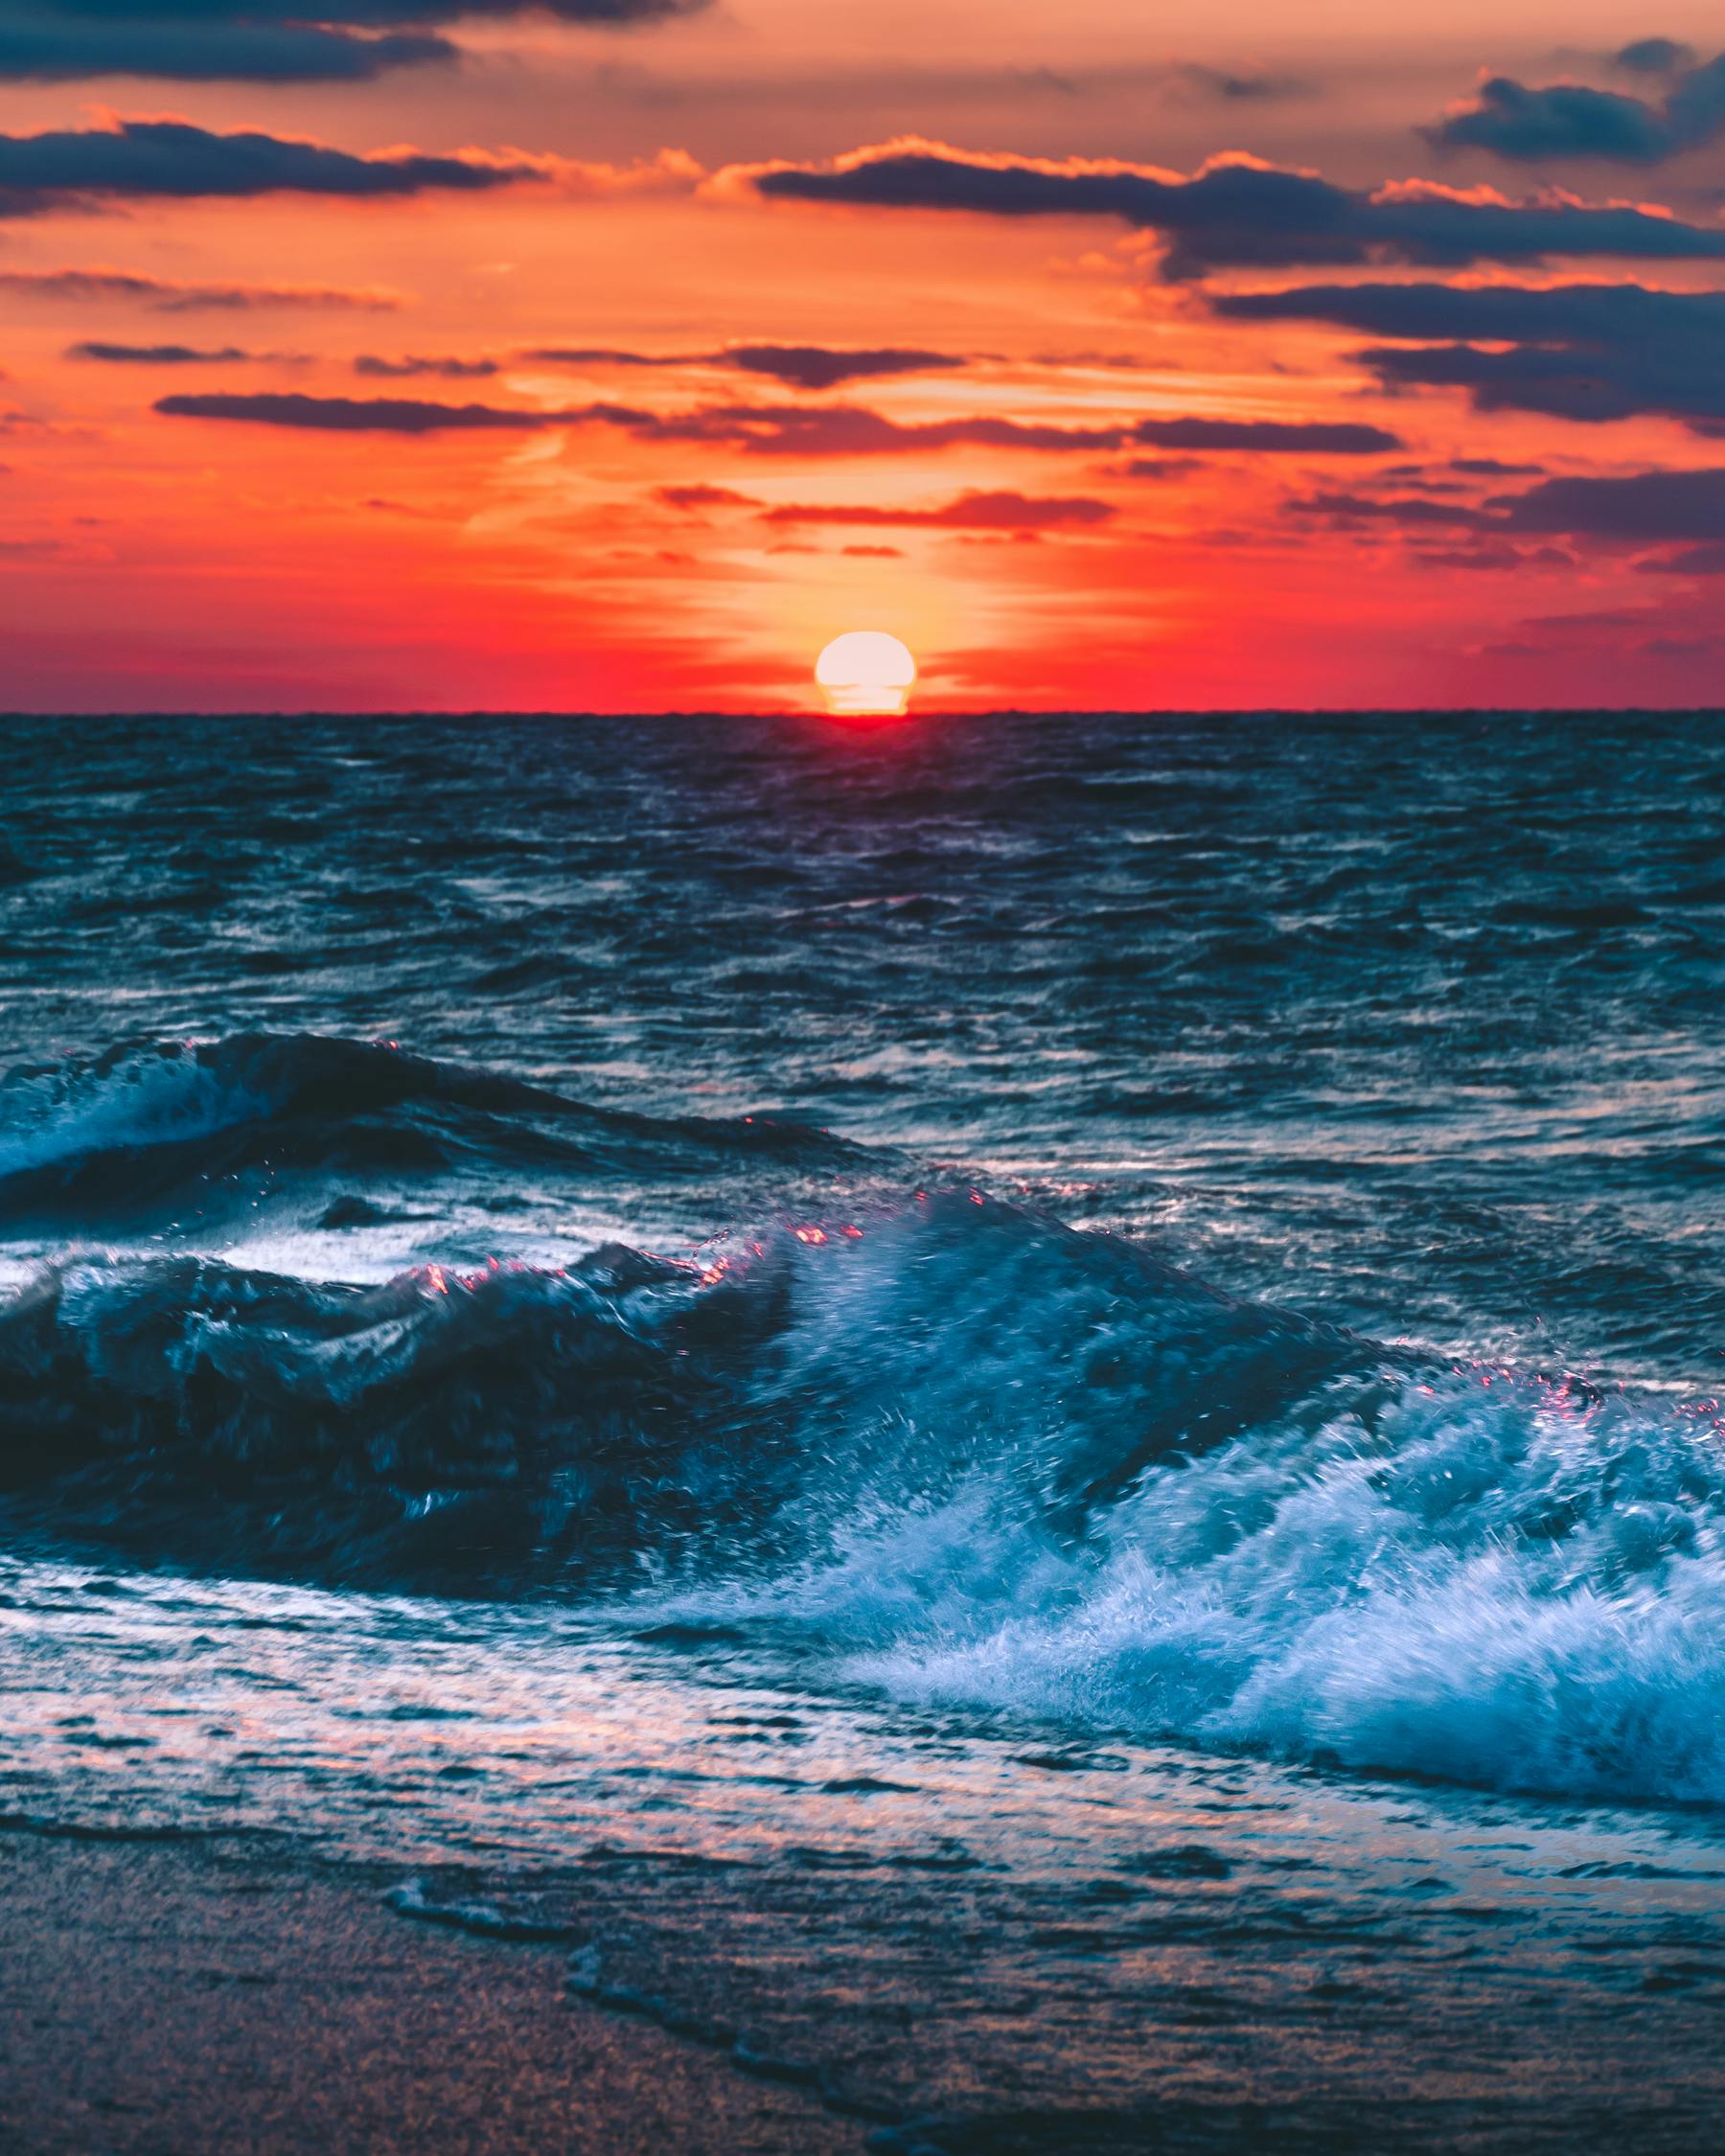 Foto Des Ozeans Während Des Sonnenuntergangs · Kostenloses Stock Foto